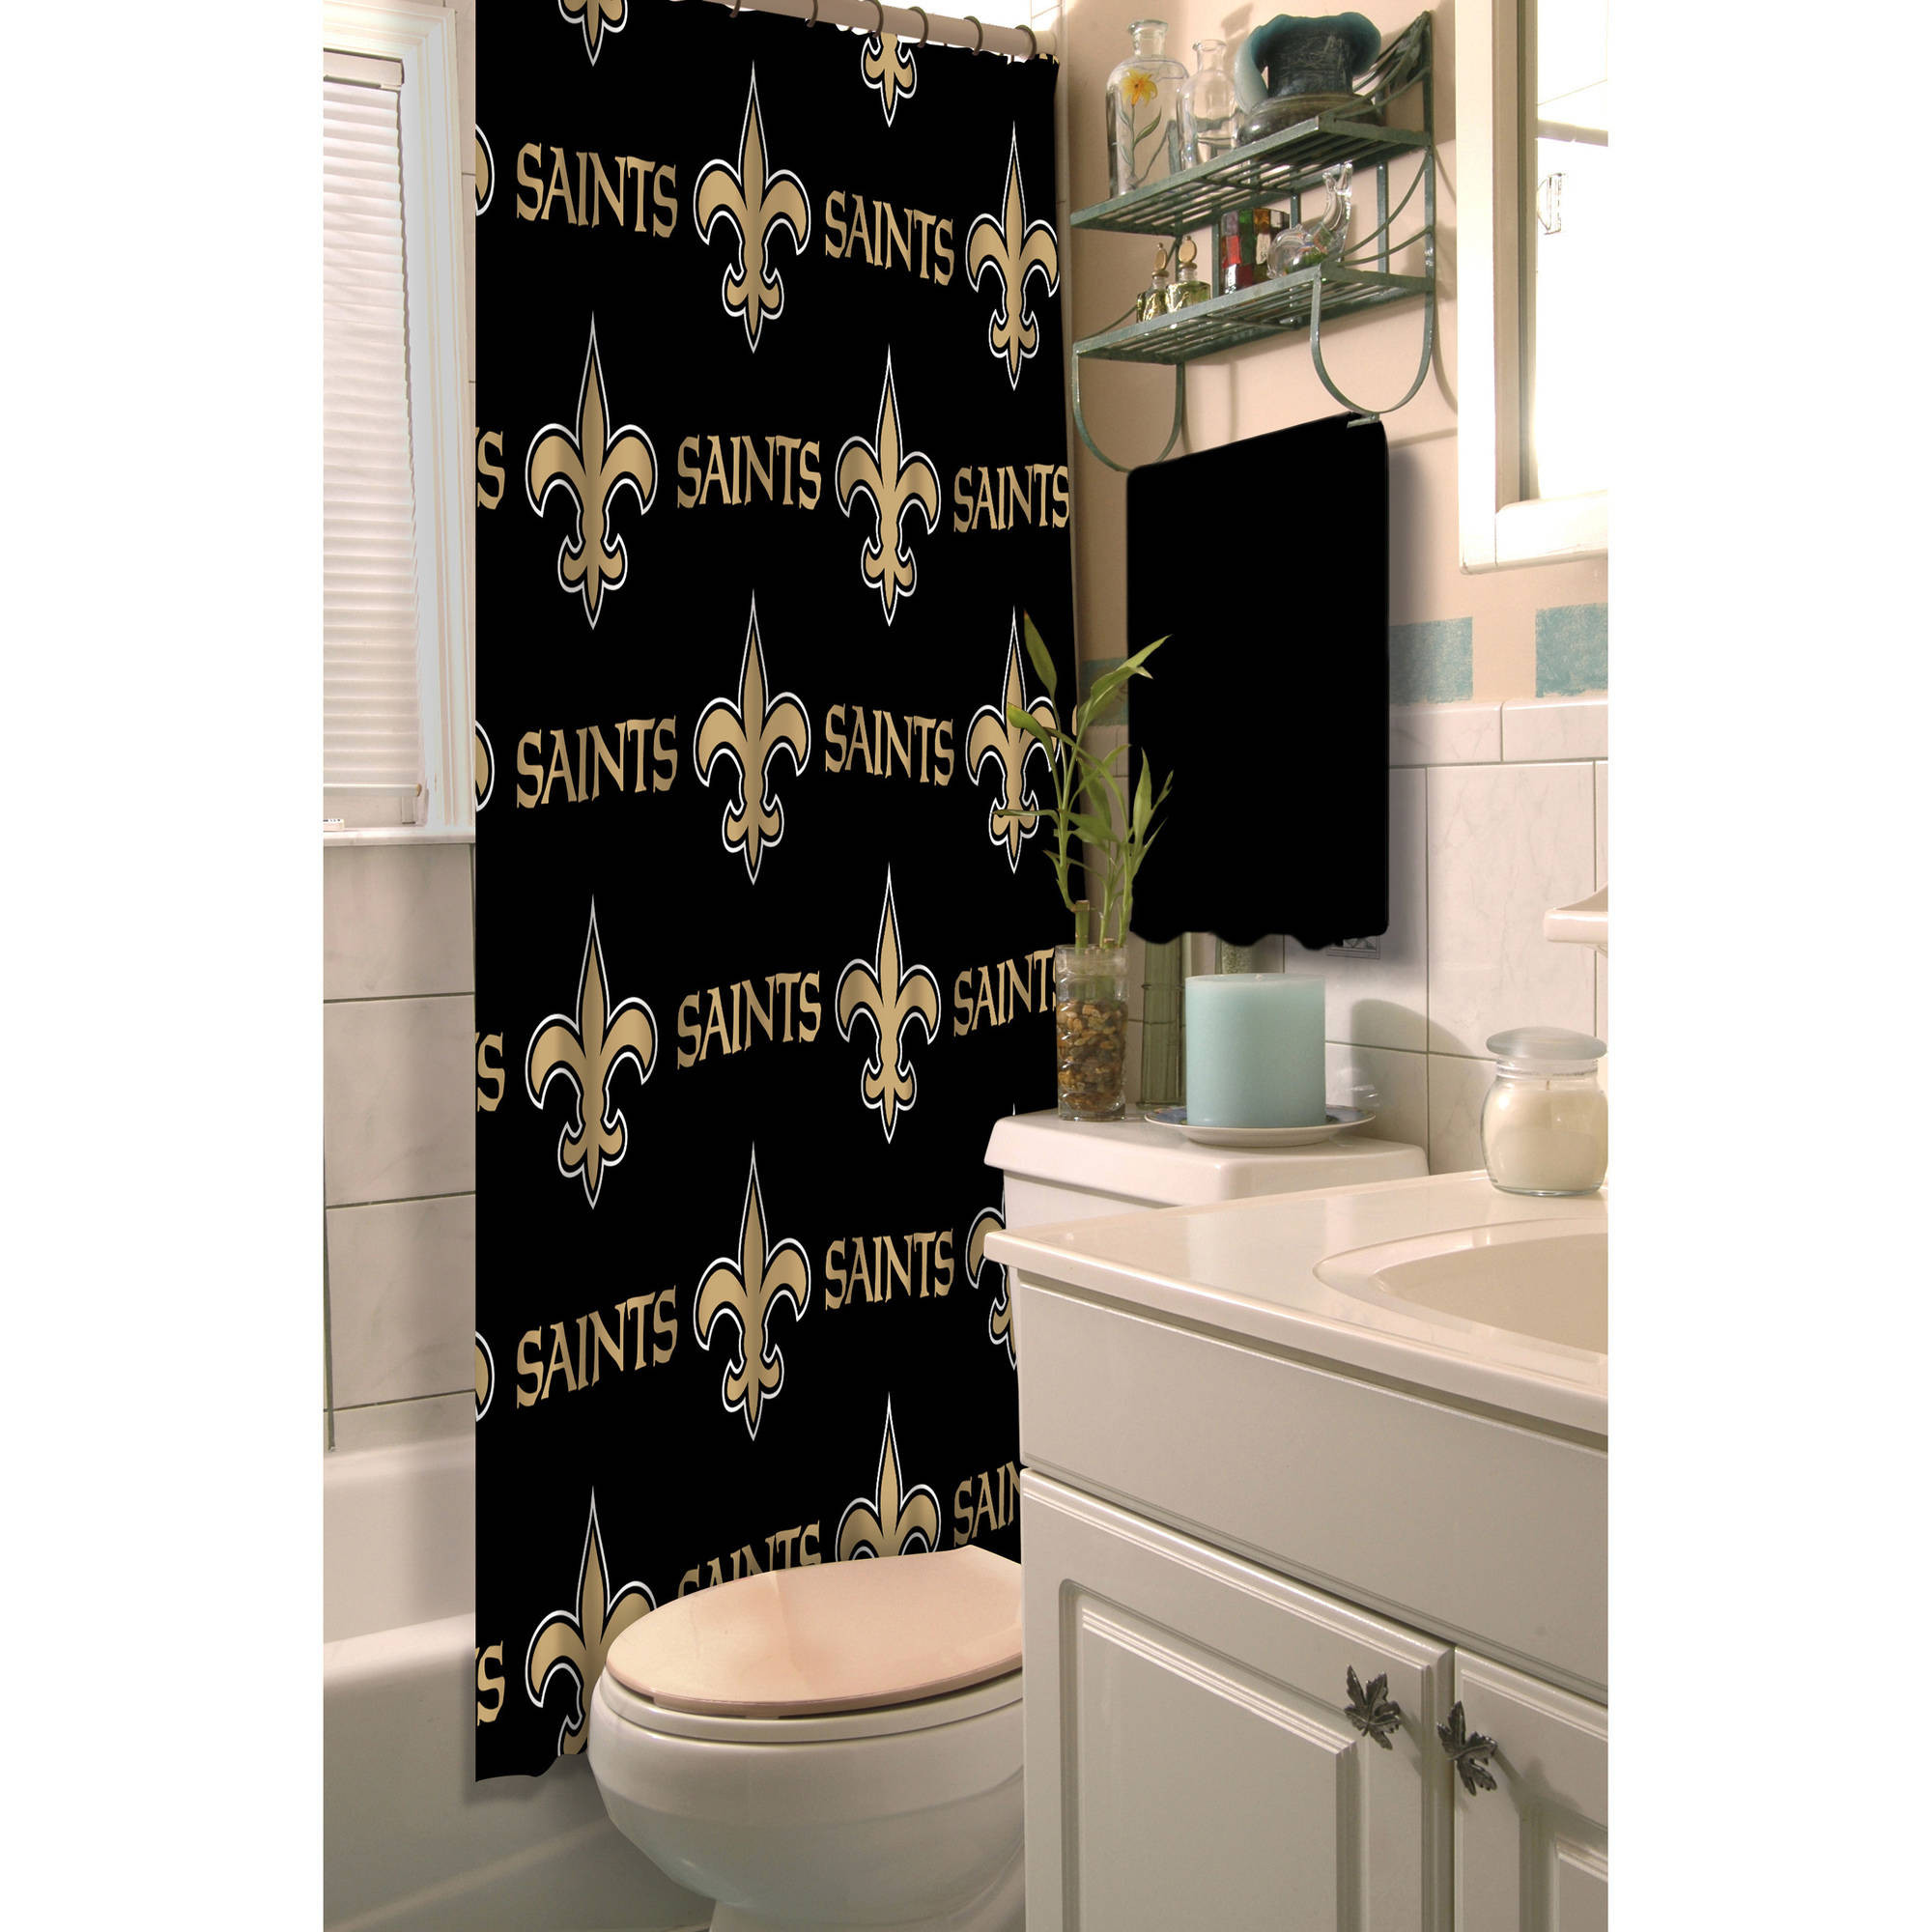 Walmart Bathroom Shower Curtain Sets
 Bathroom Wondrous Shower Curtain Walmart With Alluring